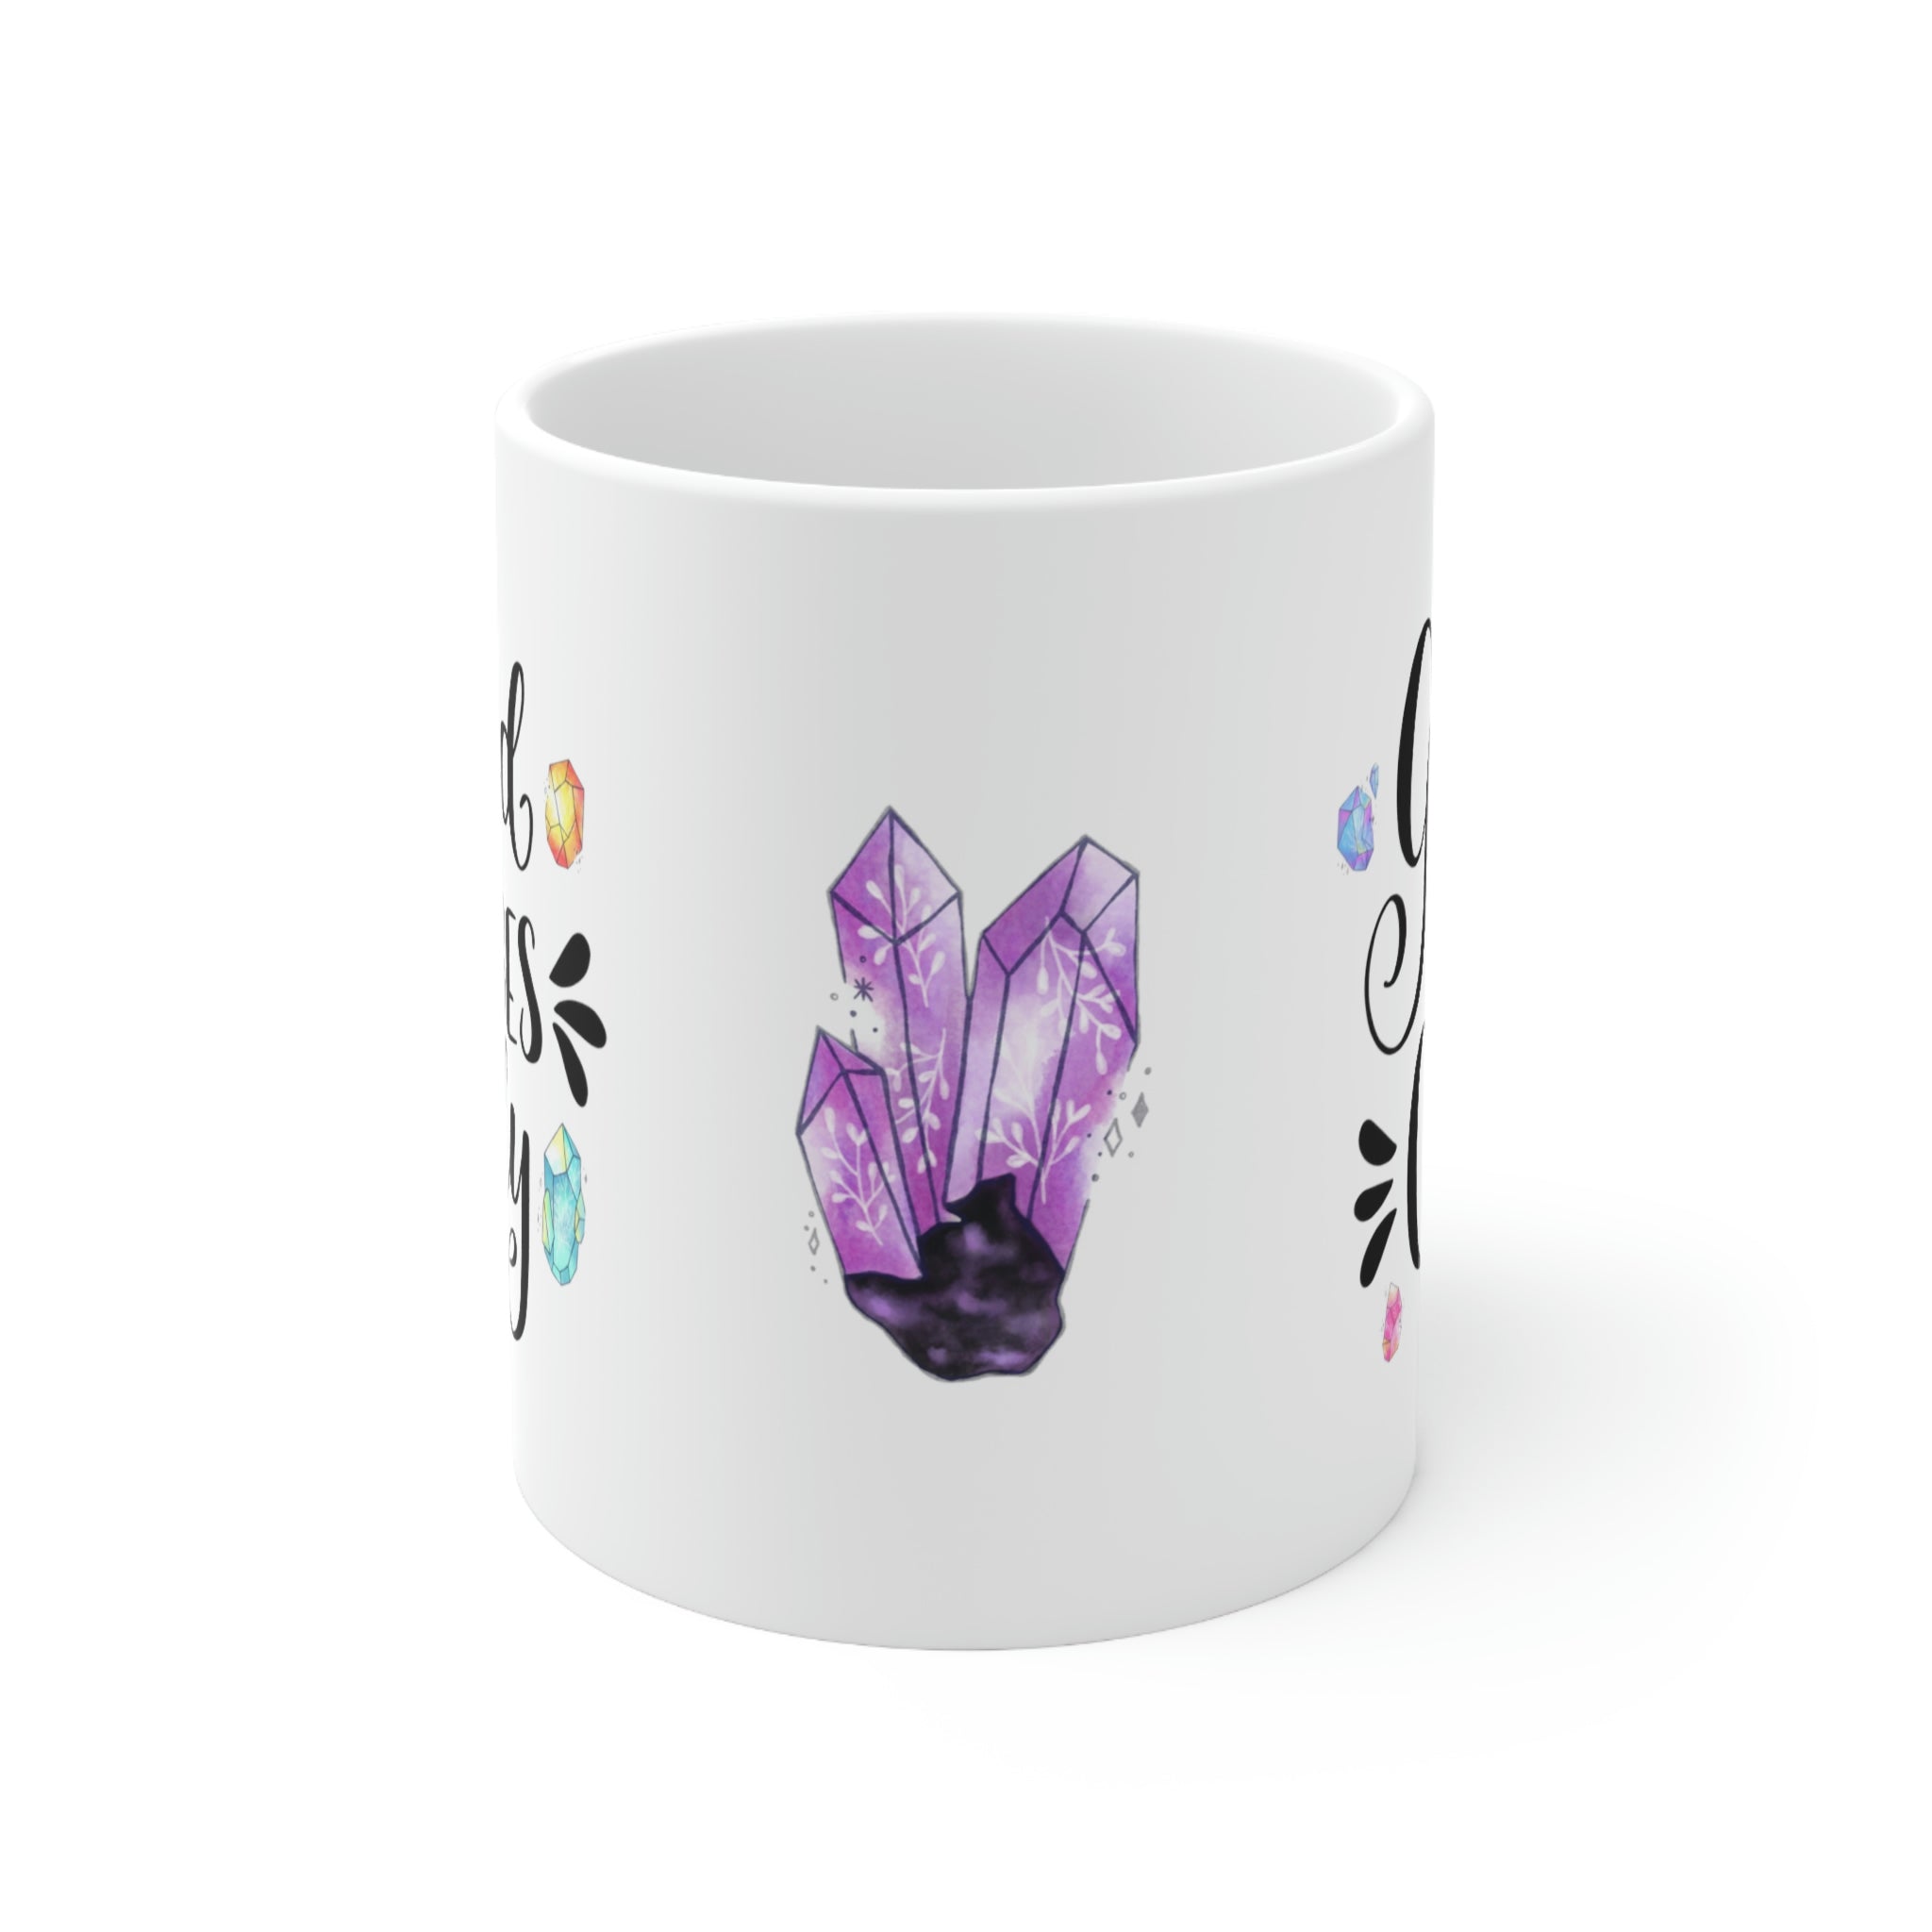 Good Vibes Only Ceramic Mug